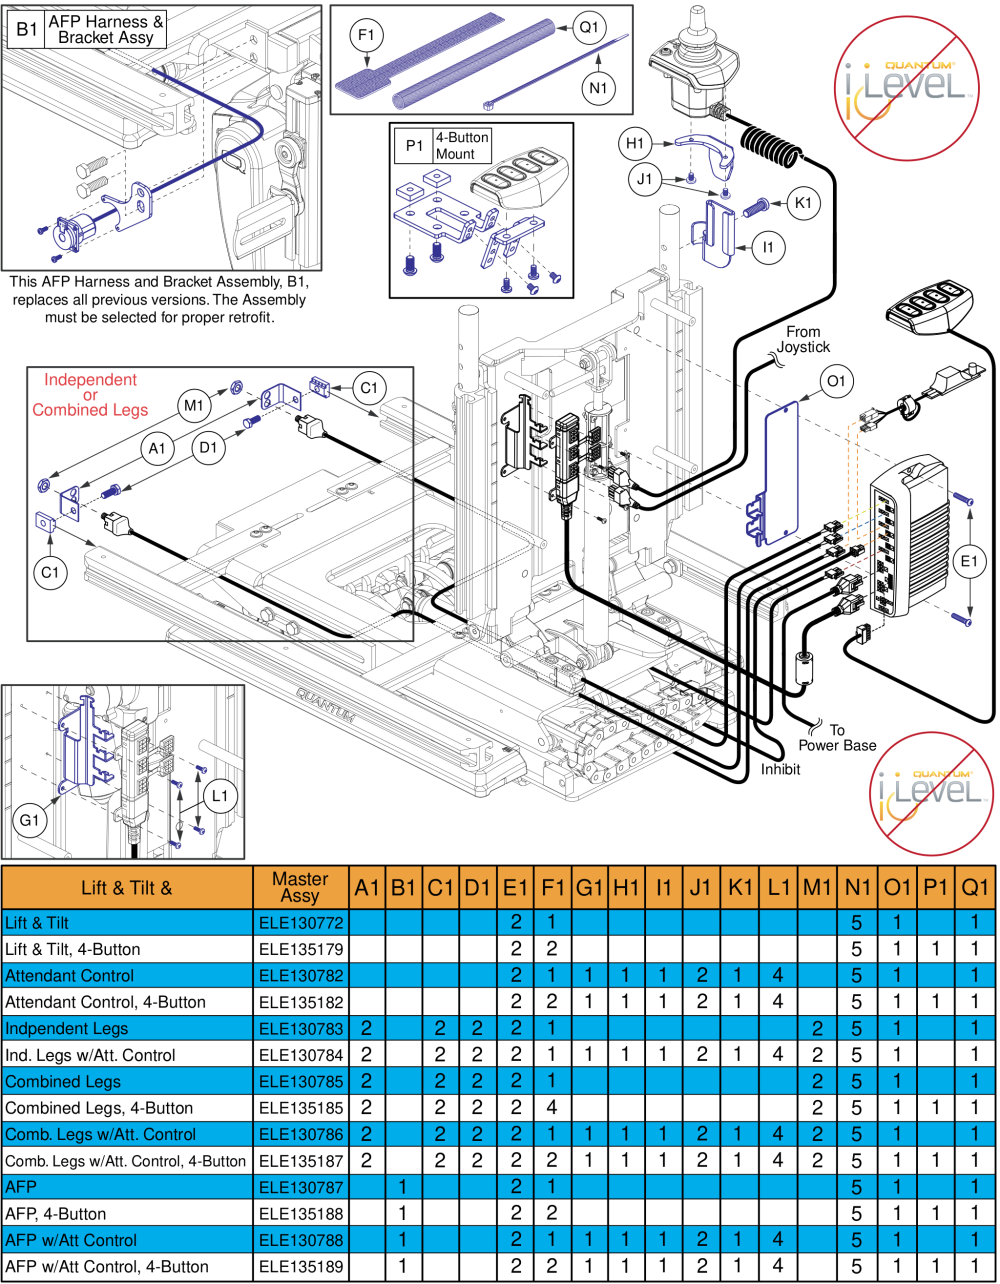 Lift & Tilt Hardware, Q-logic 2 - Reac Lift / Non I-level parts diagram